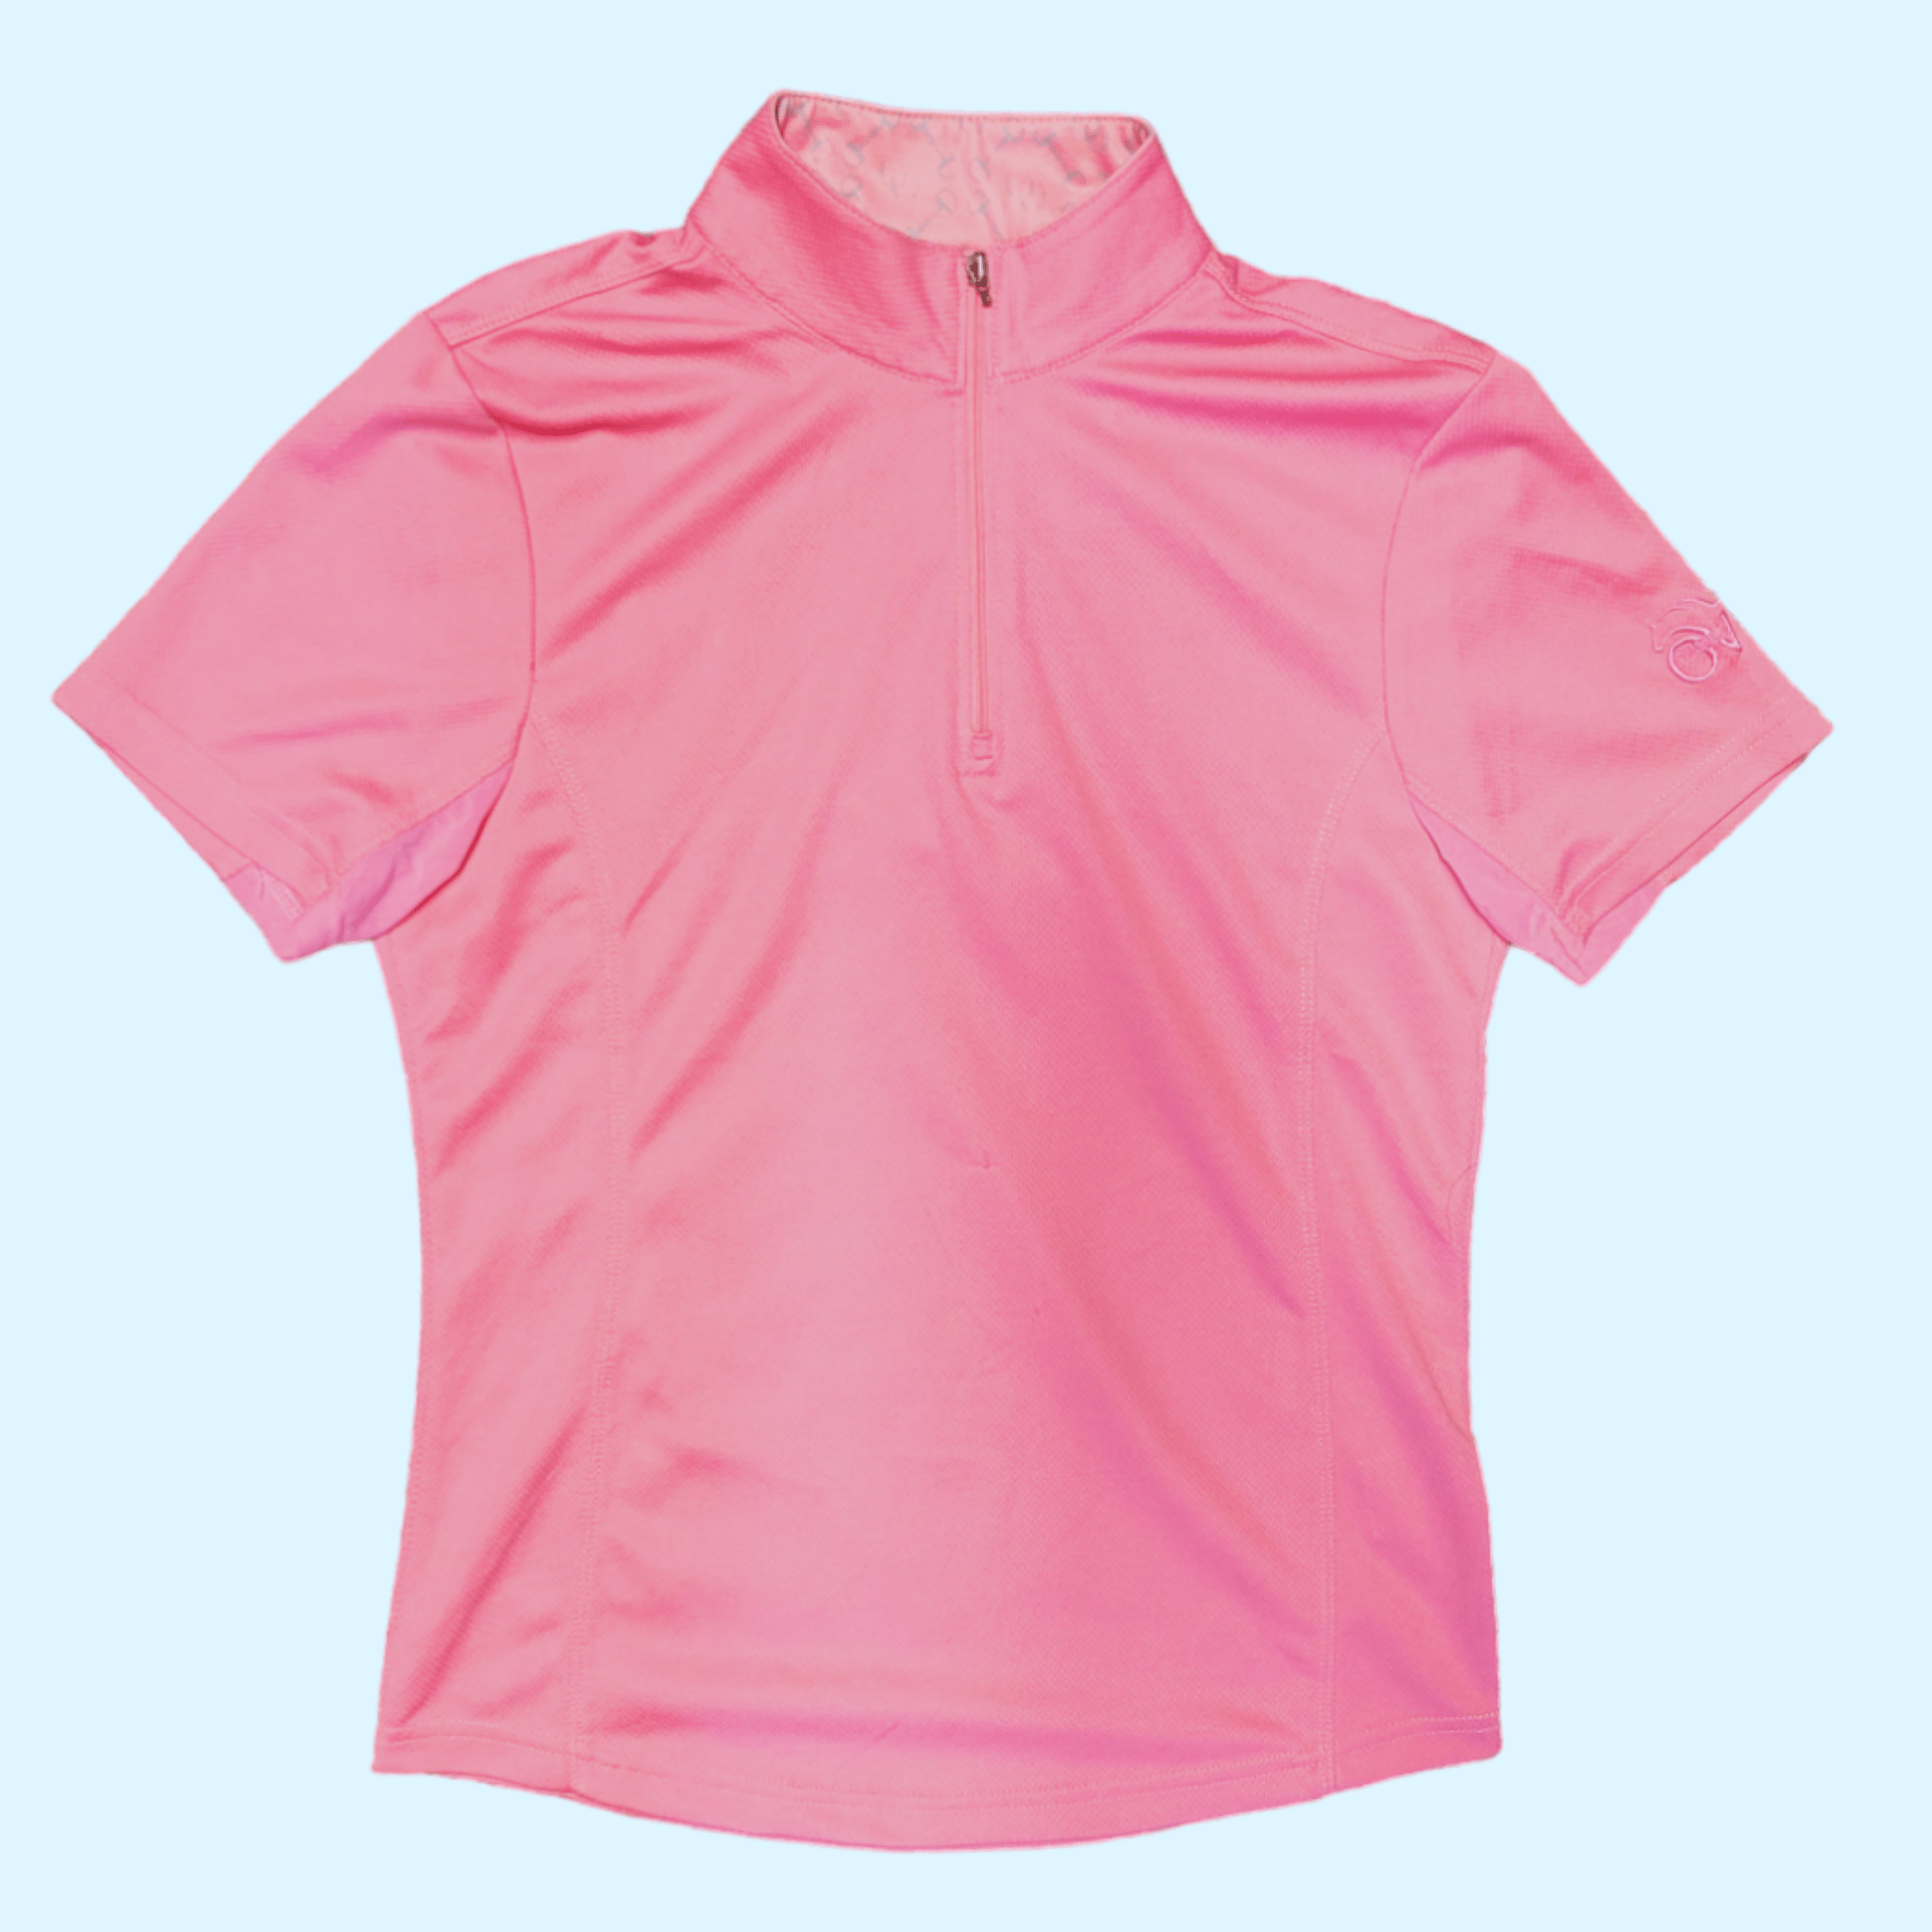 Ovation Children's Short Sleeve Sun Shirt in Confetti Pink - CH XL - Equine Exchange Tack Shop